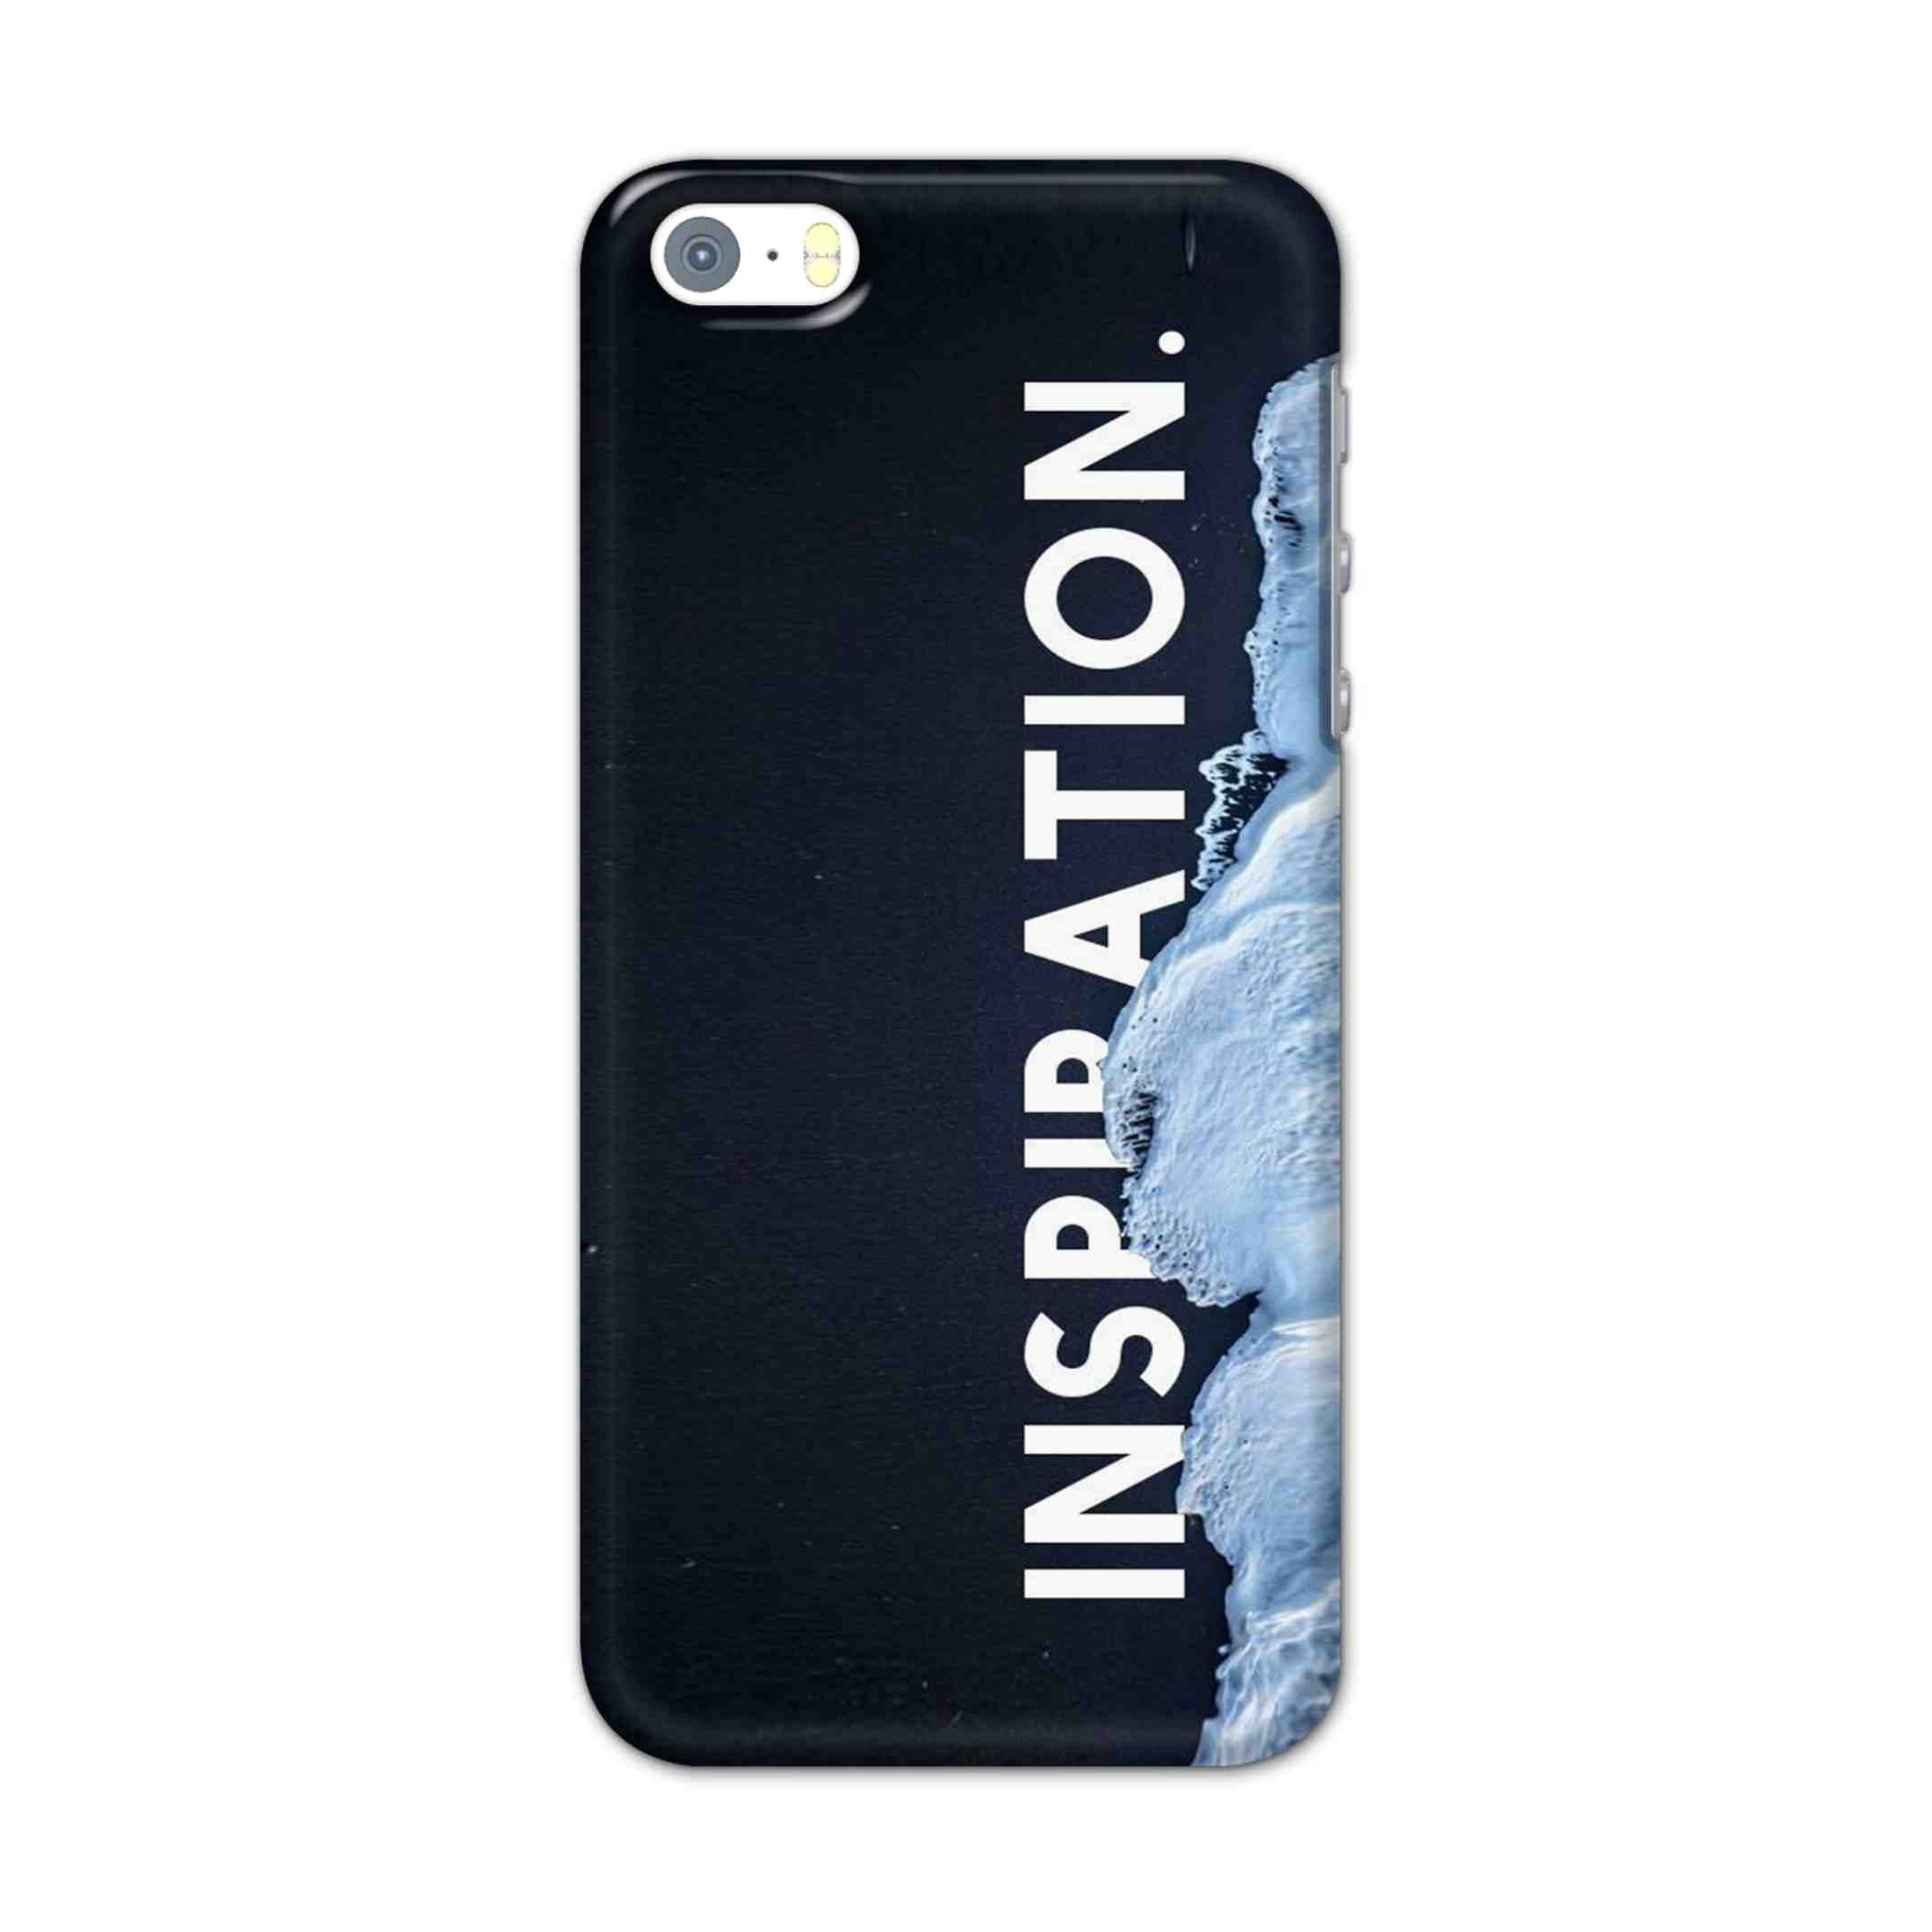 Buy Inspiration Hard Back Mobile Phone Case/Cover For Apple Iphone SE Online